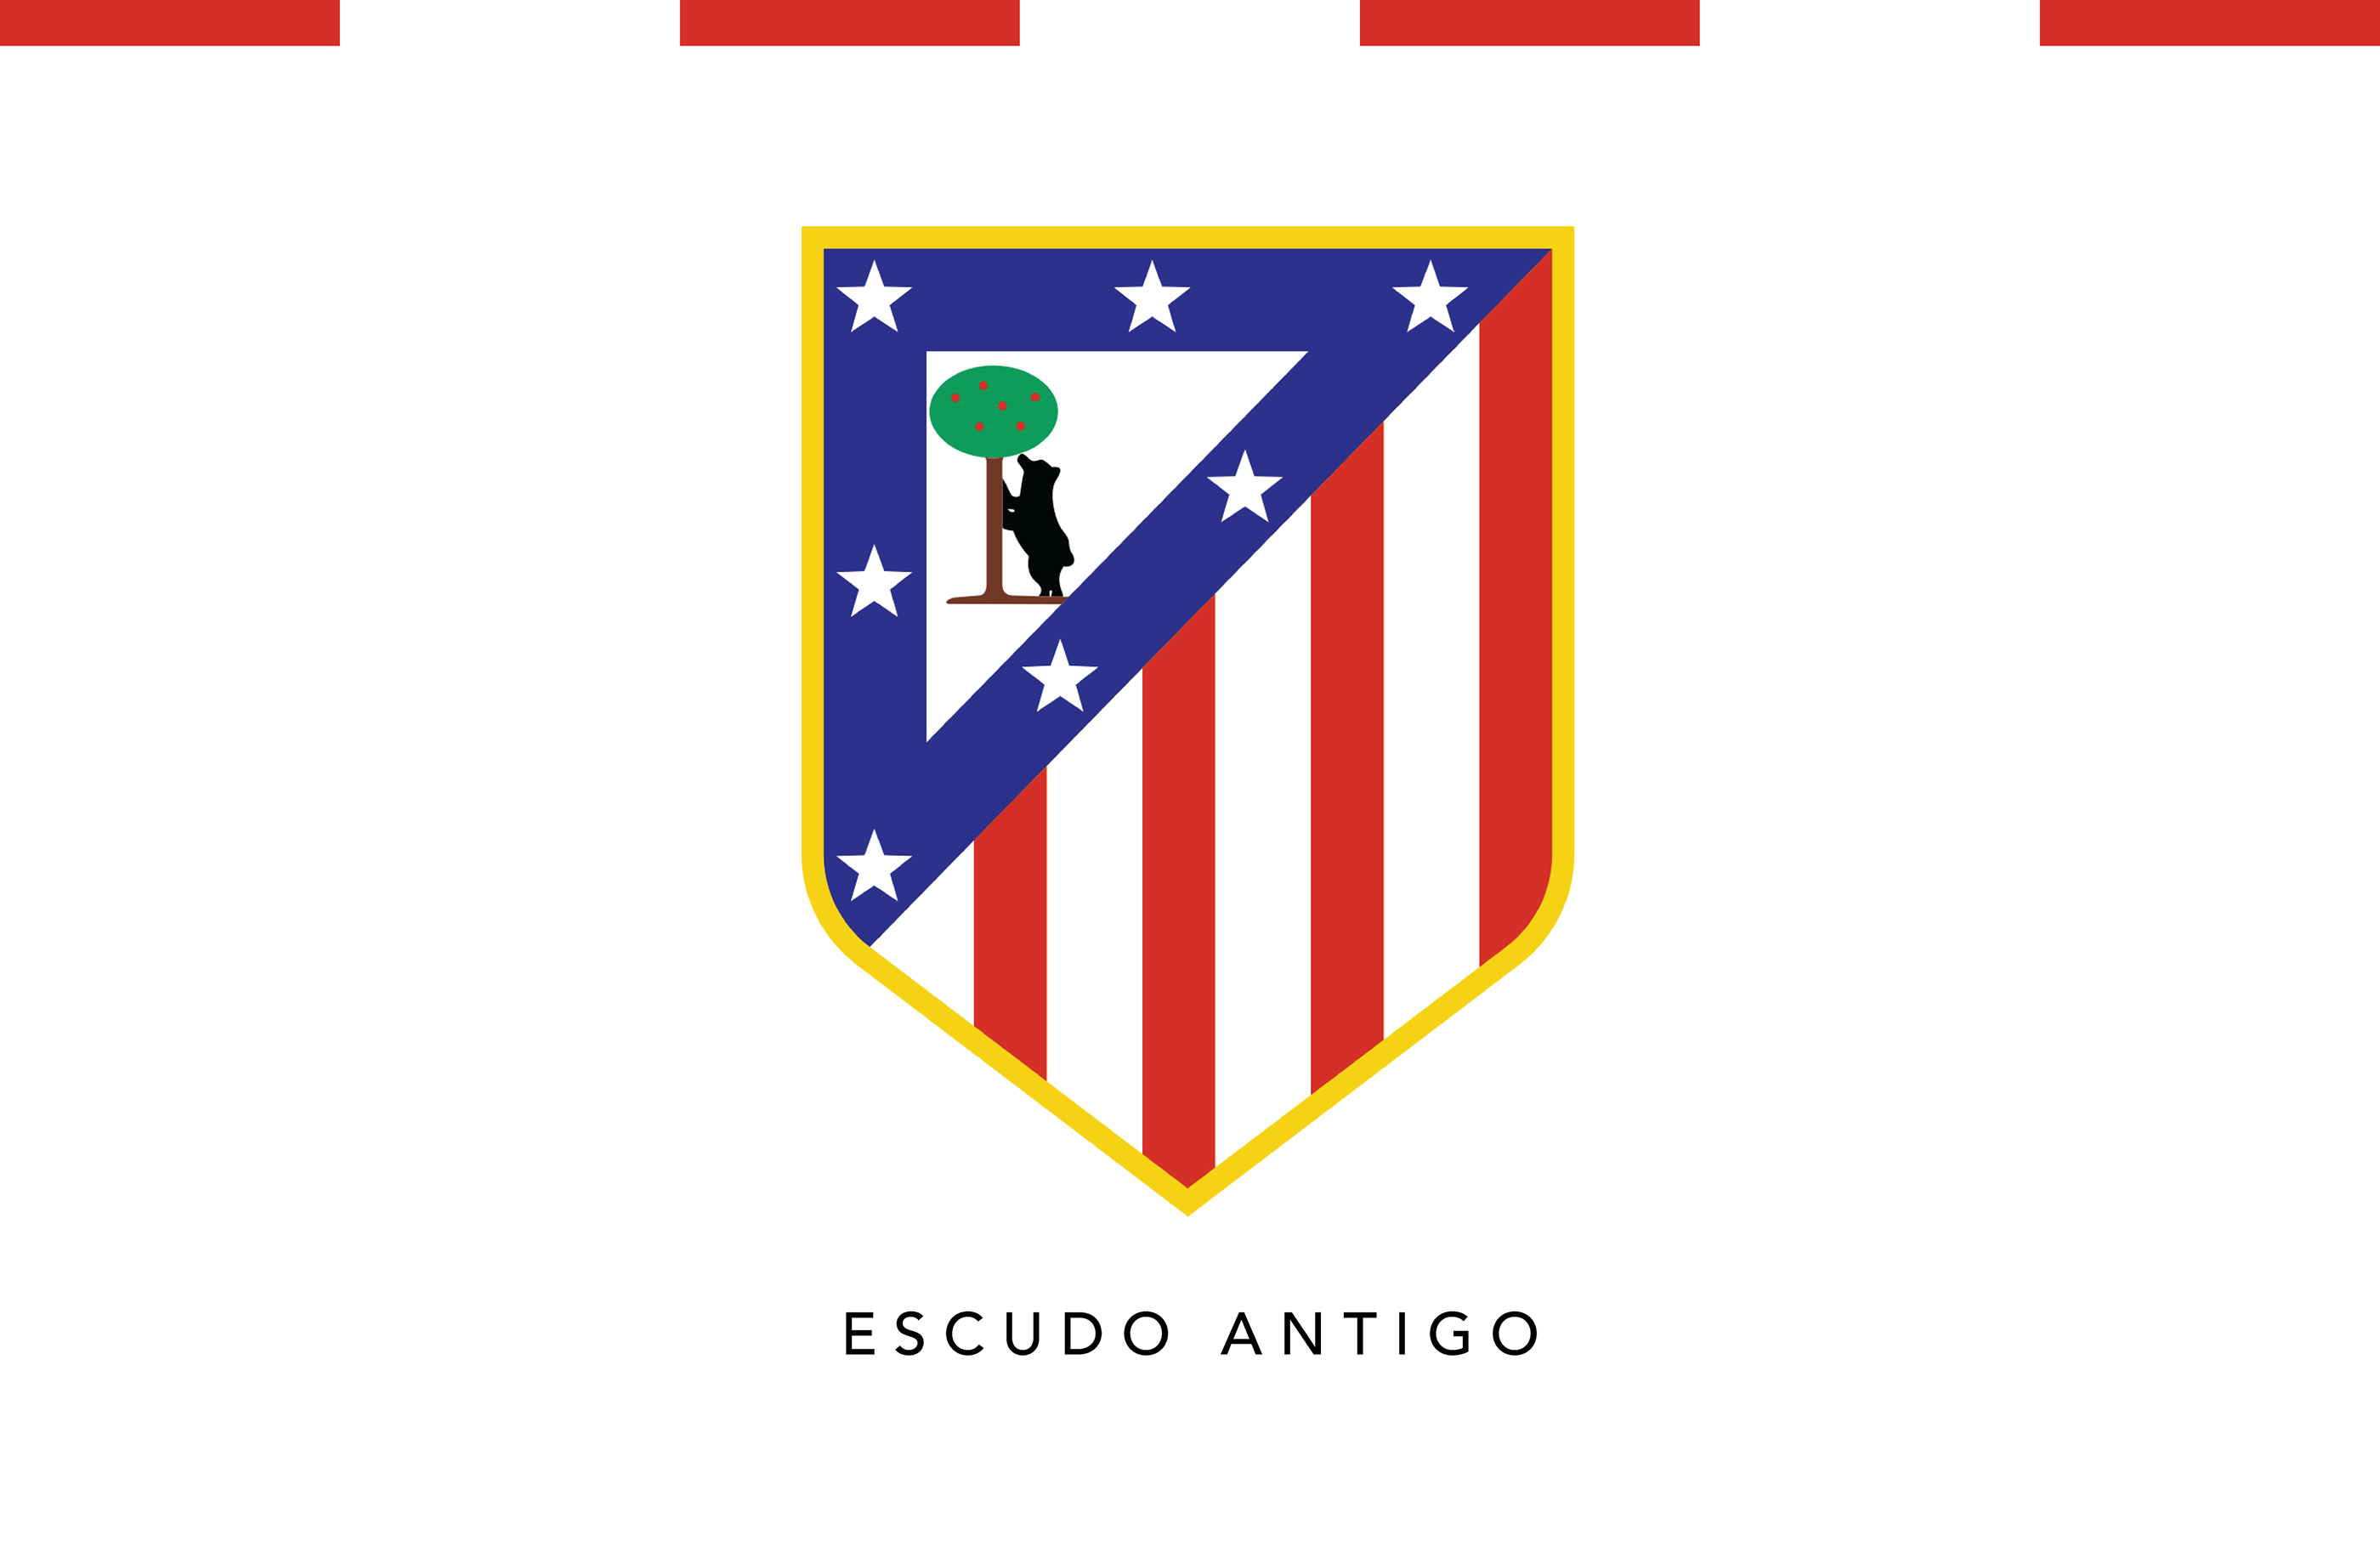 Redesign Club Atlético de Madrid on Behance